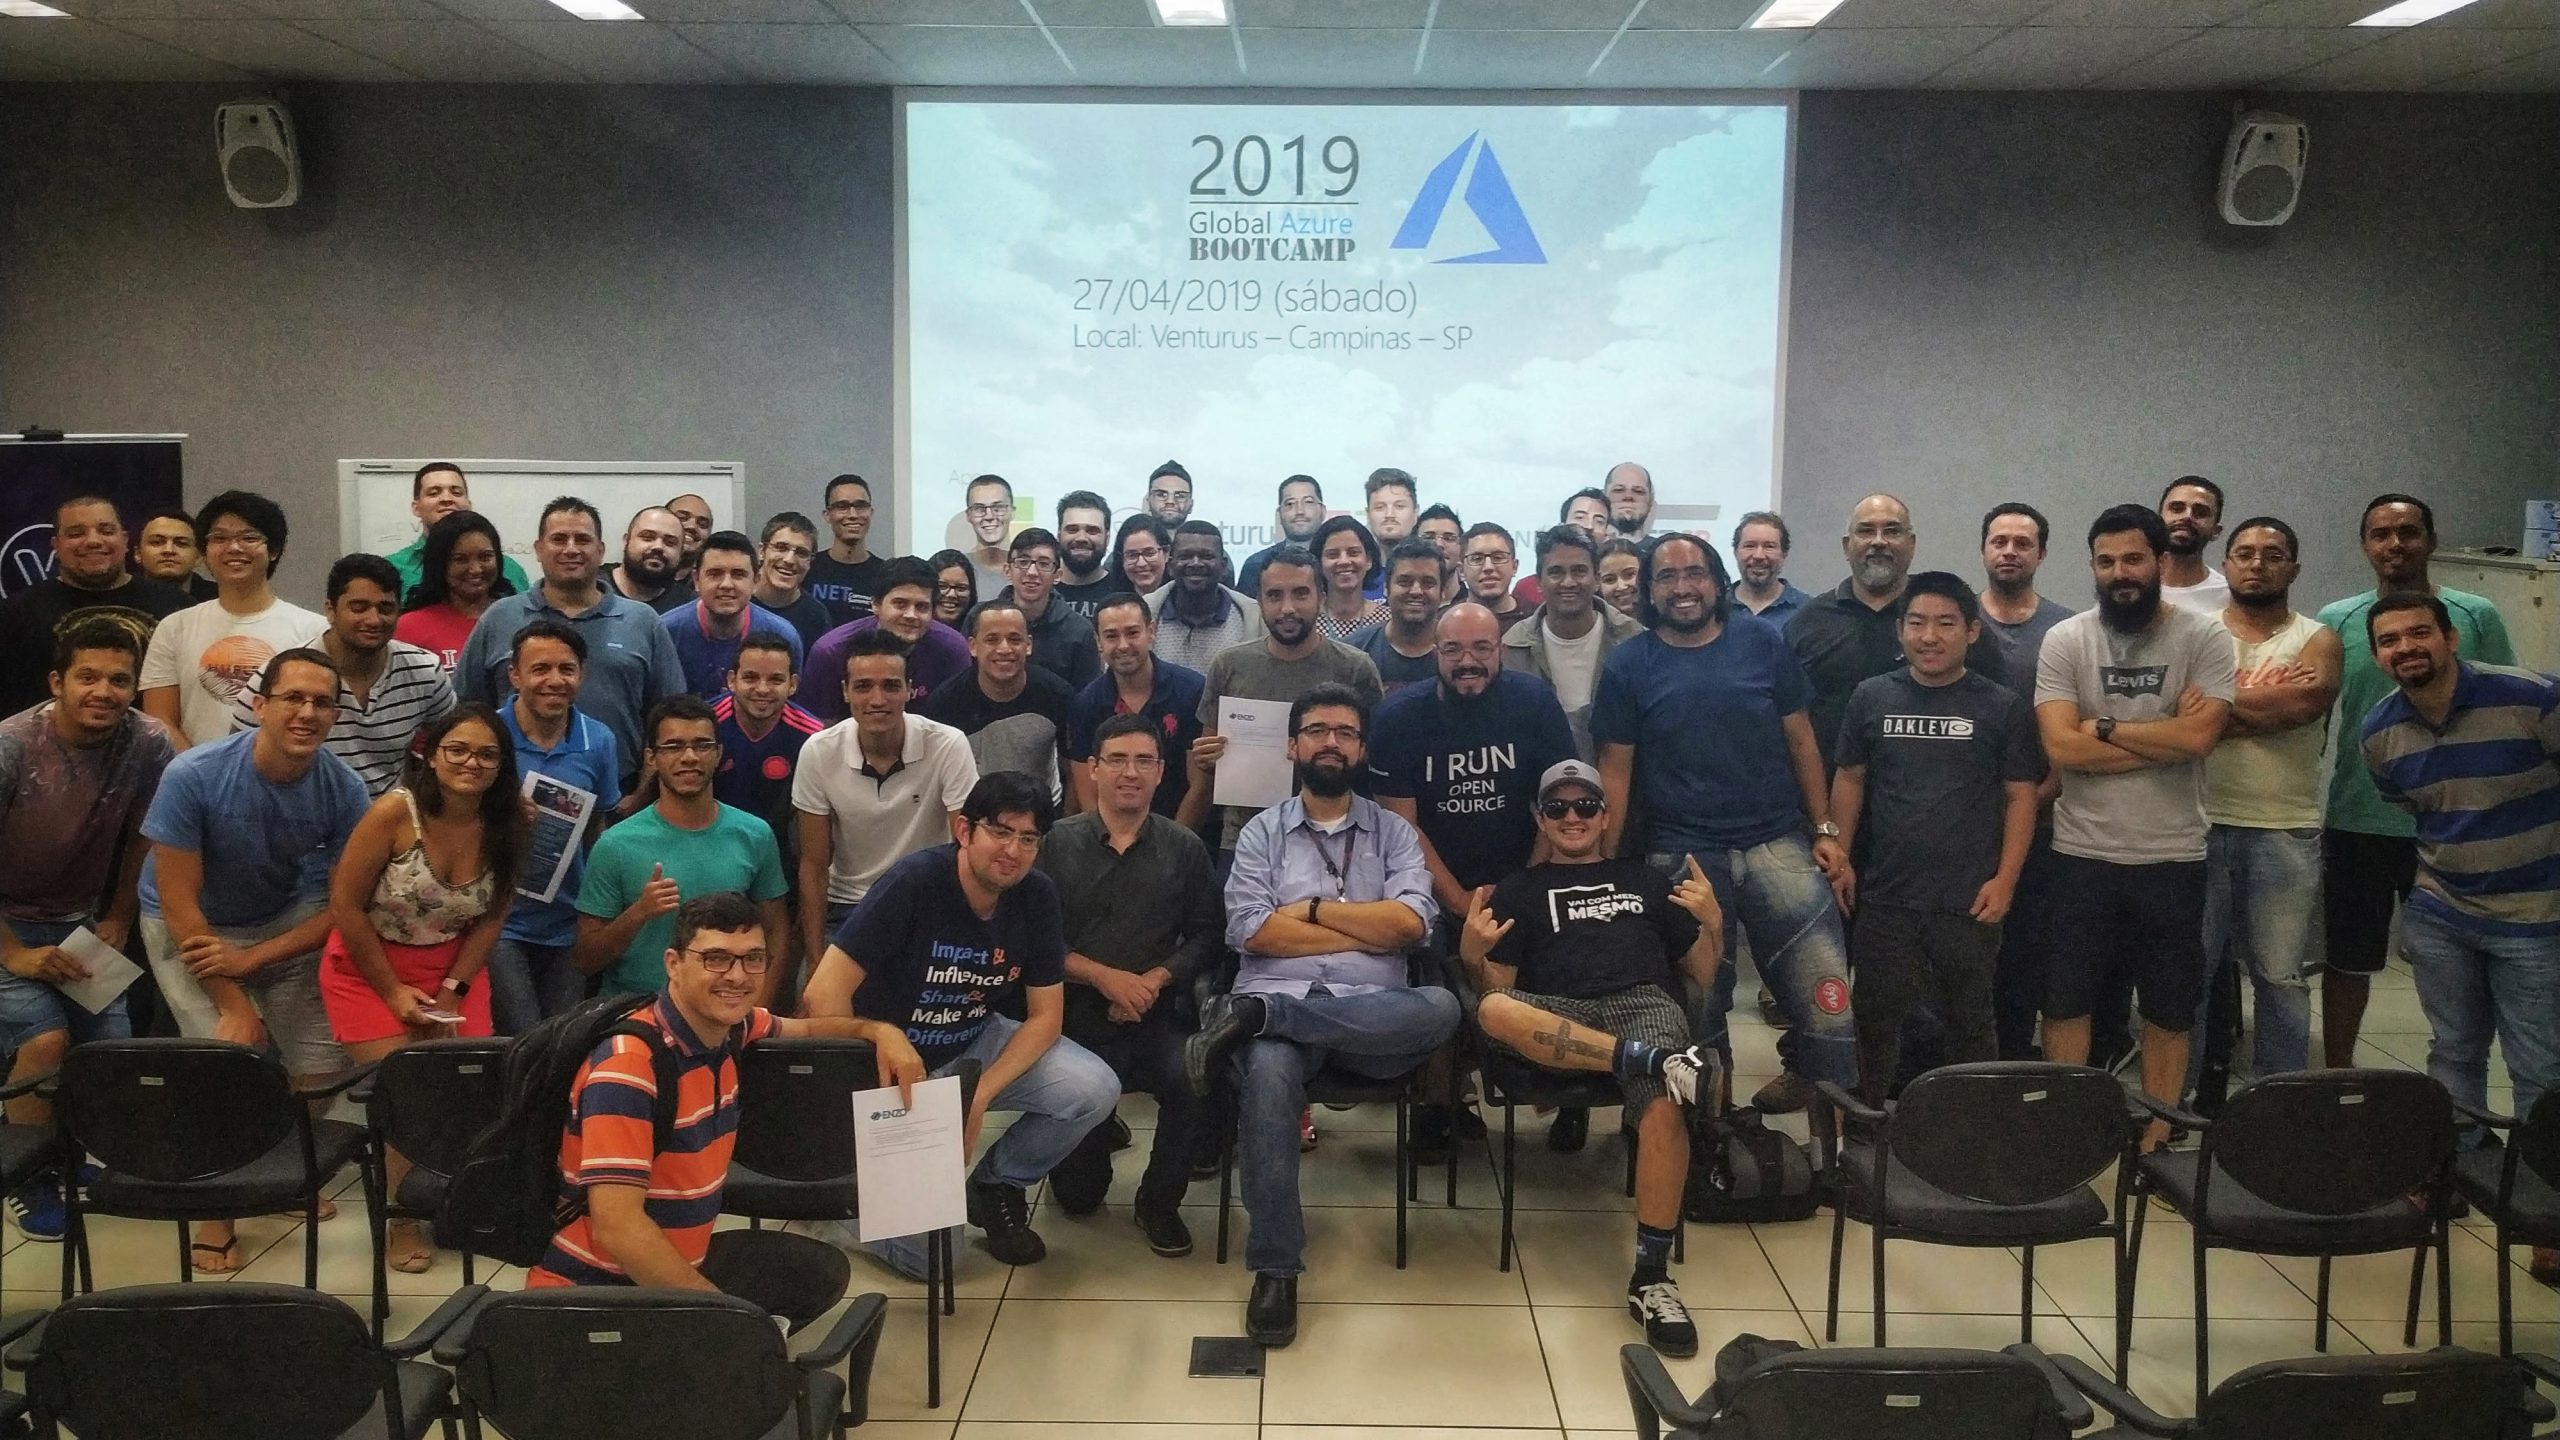 Global Azure Bootcamp 2019 – Campinas